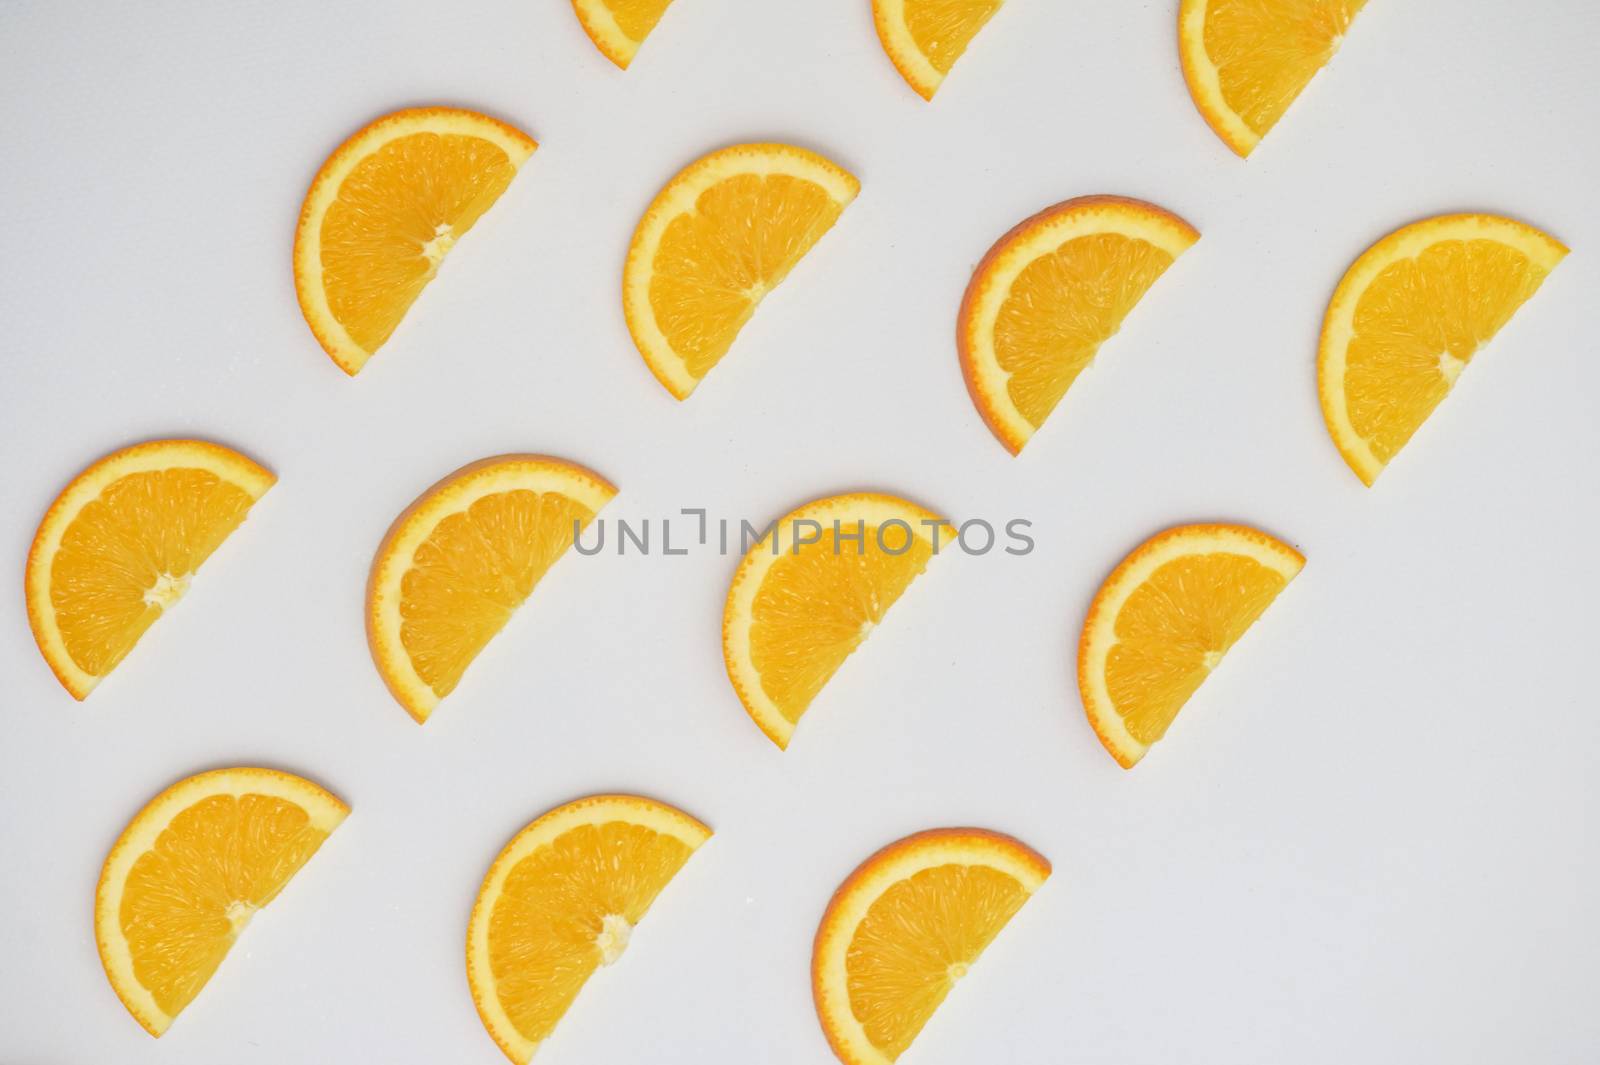 Pattern Background with Orange fruit slices